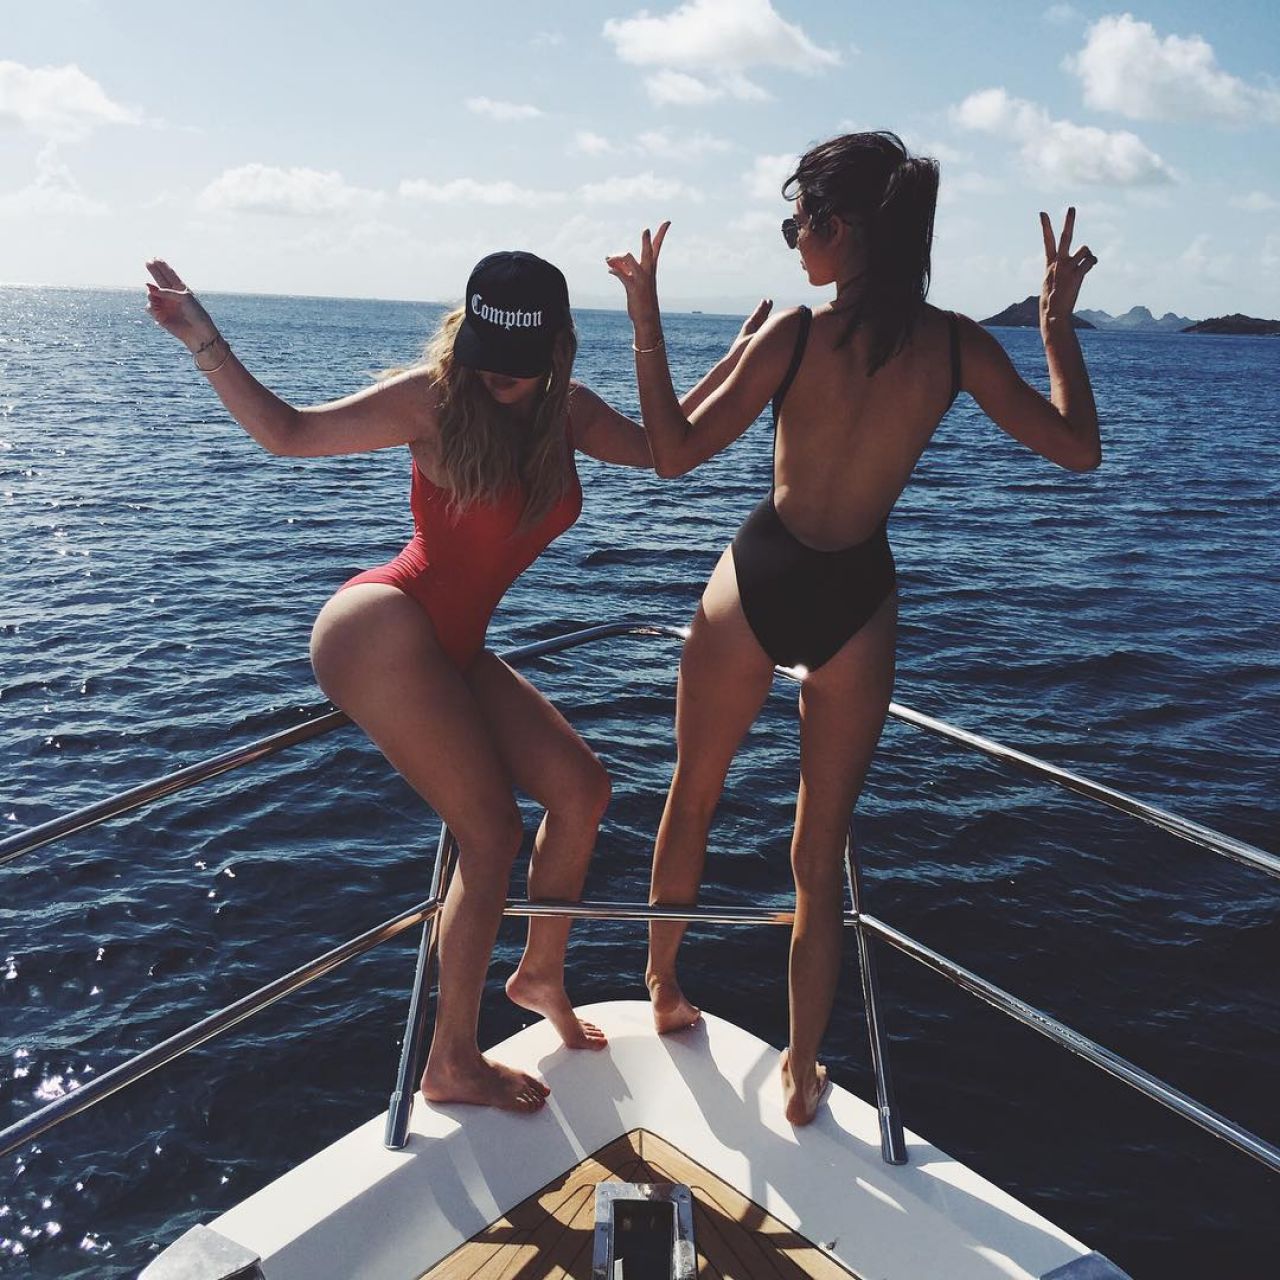 kendall-jenner-khloe-kardashian-on-a-boat-instagram-pics-august-2015_2